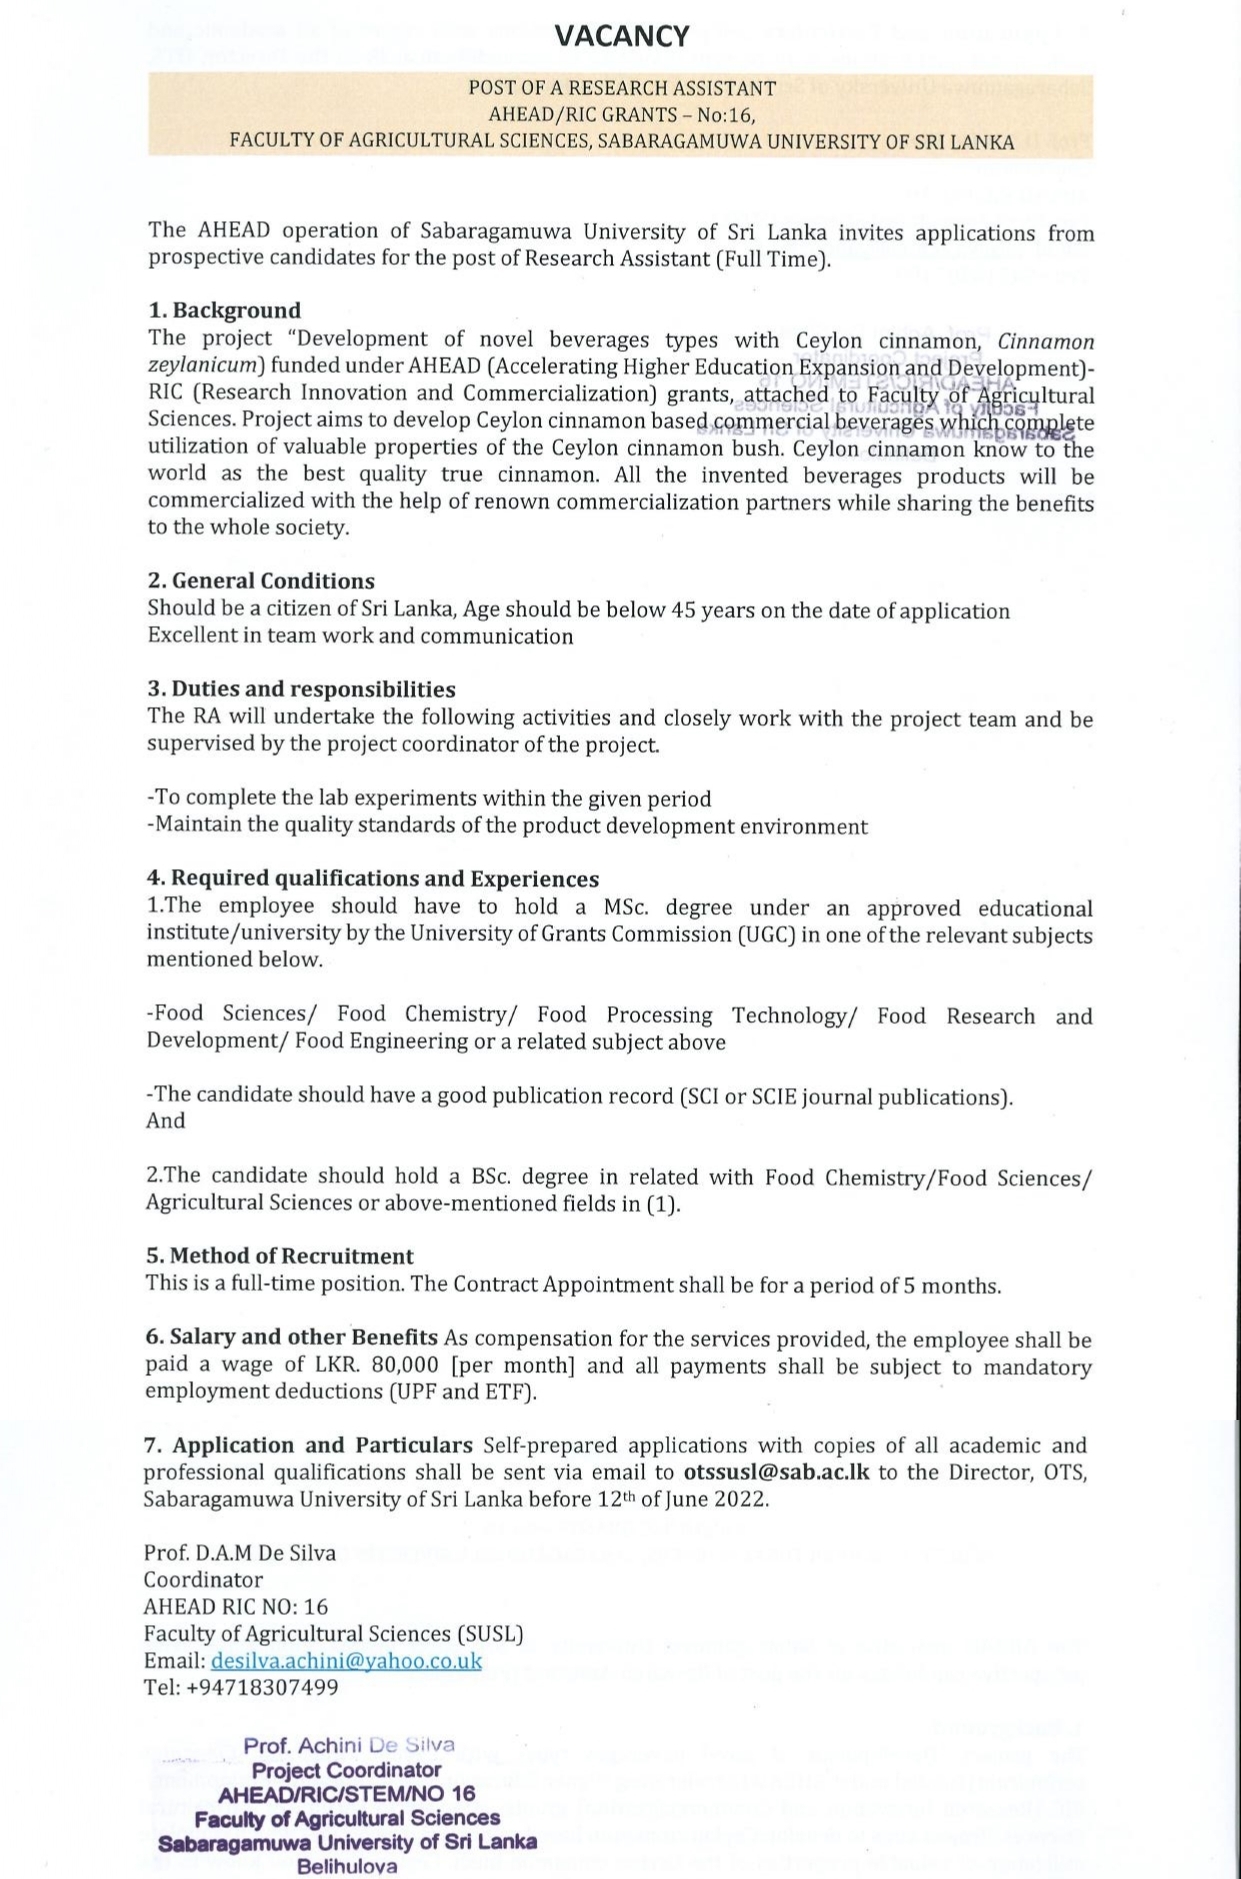 Research Assistant Vacancies (AHEAD) - Sabaragamuwa University of Sri Lanka Jobs Vacancies